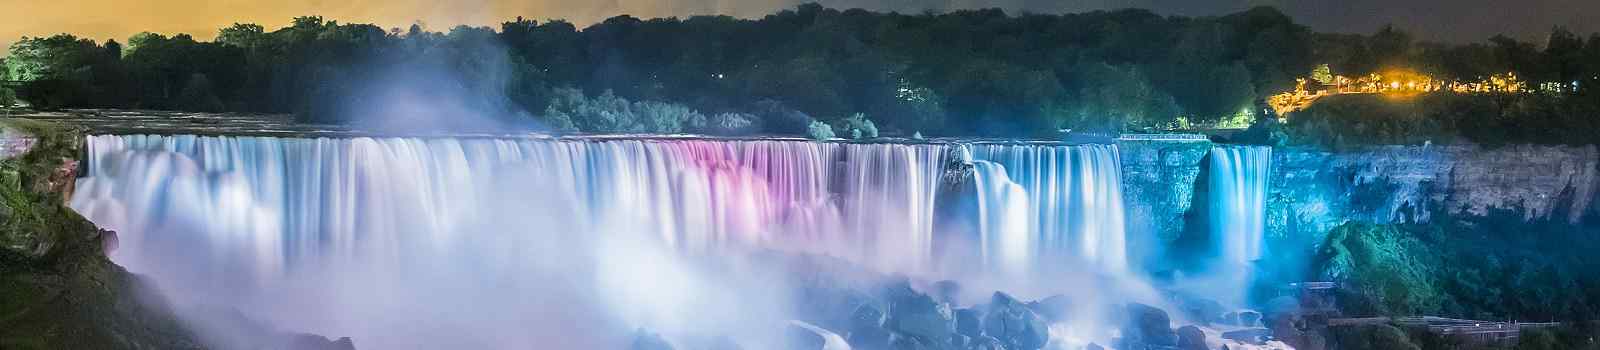 CLASSIC-EAST  Niagarafaelle farbenfroh beleuchtet in der Nacht 218469484